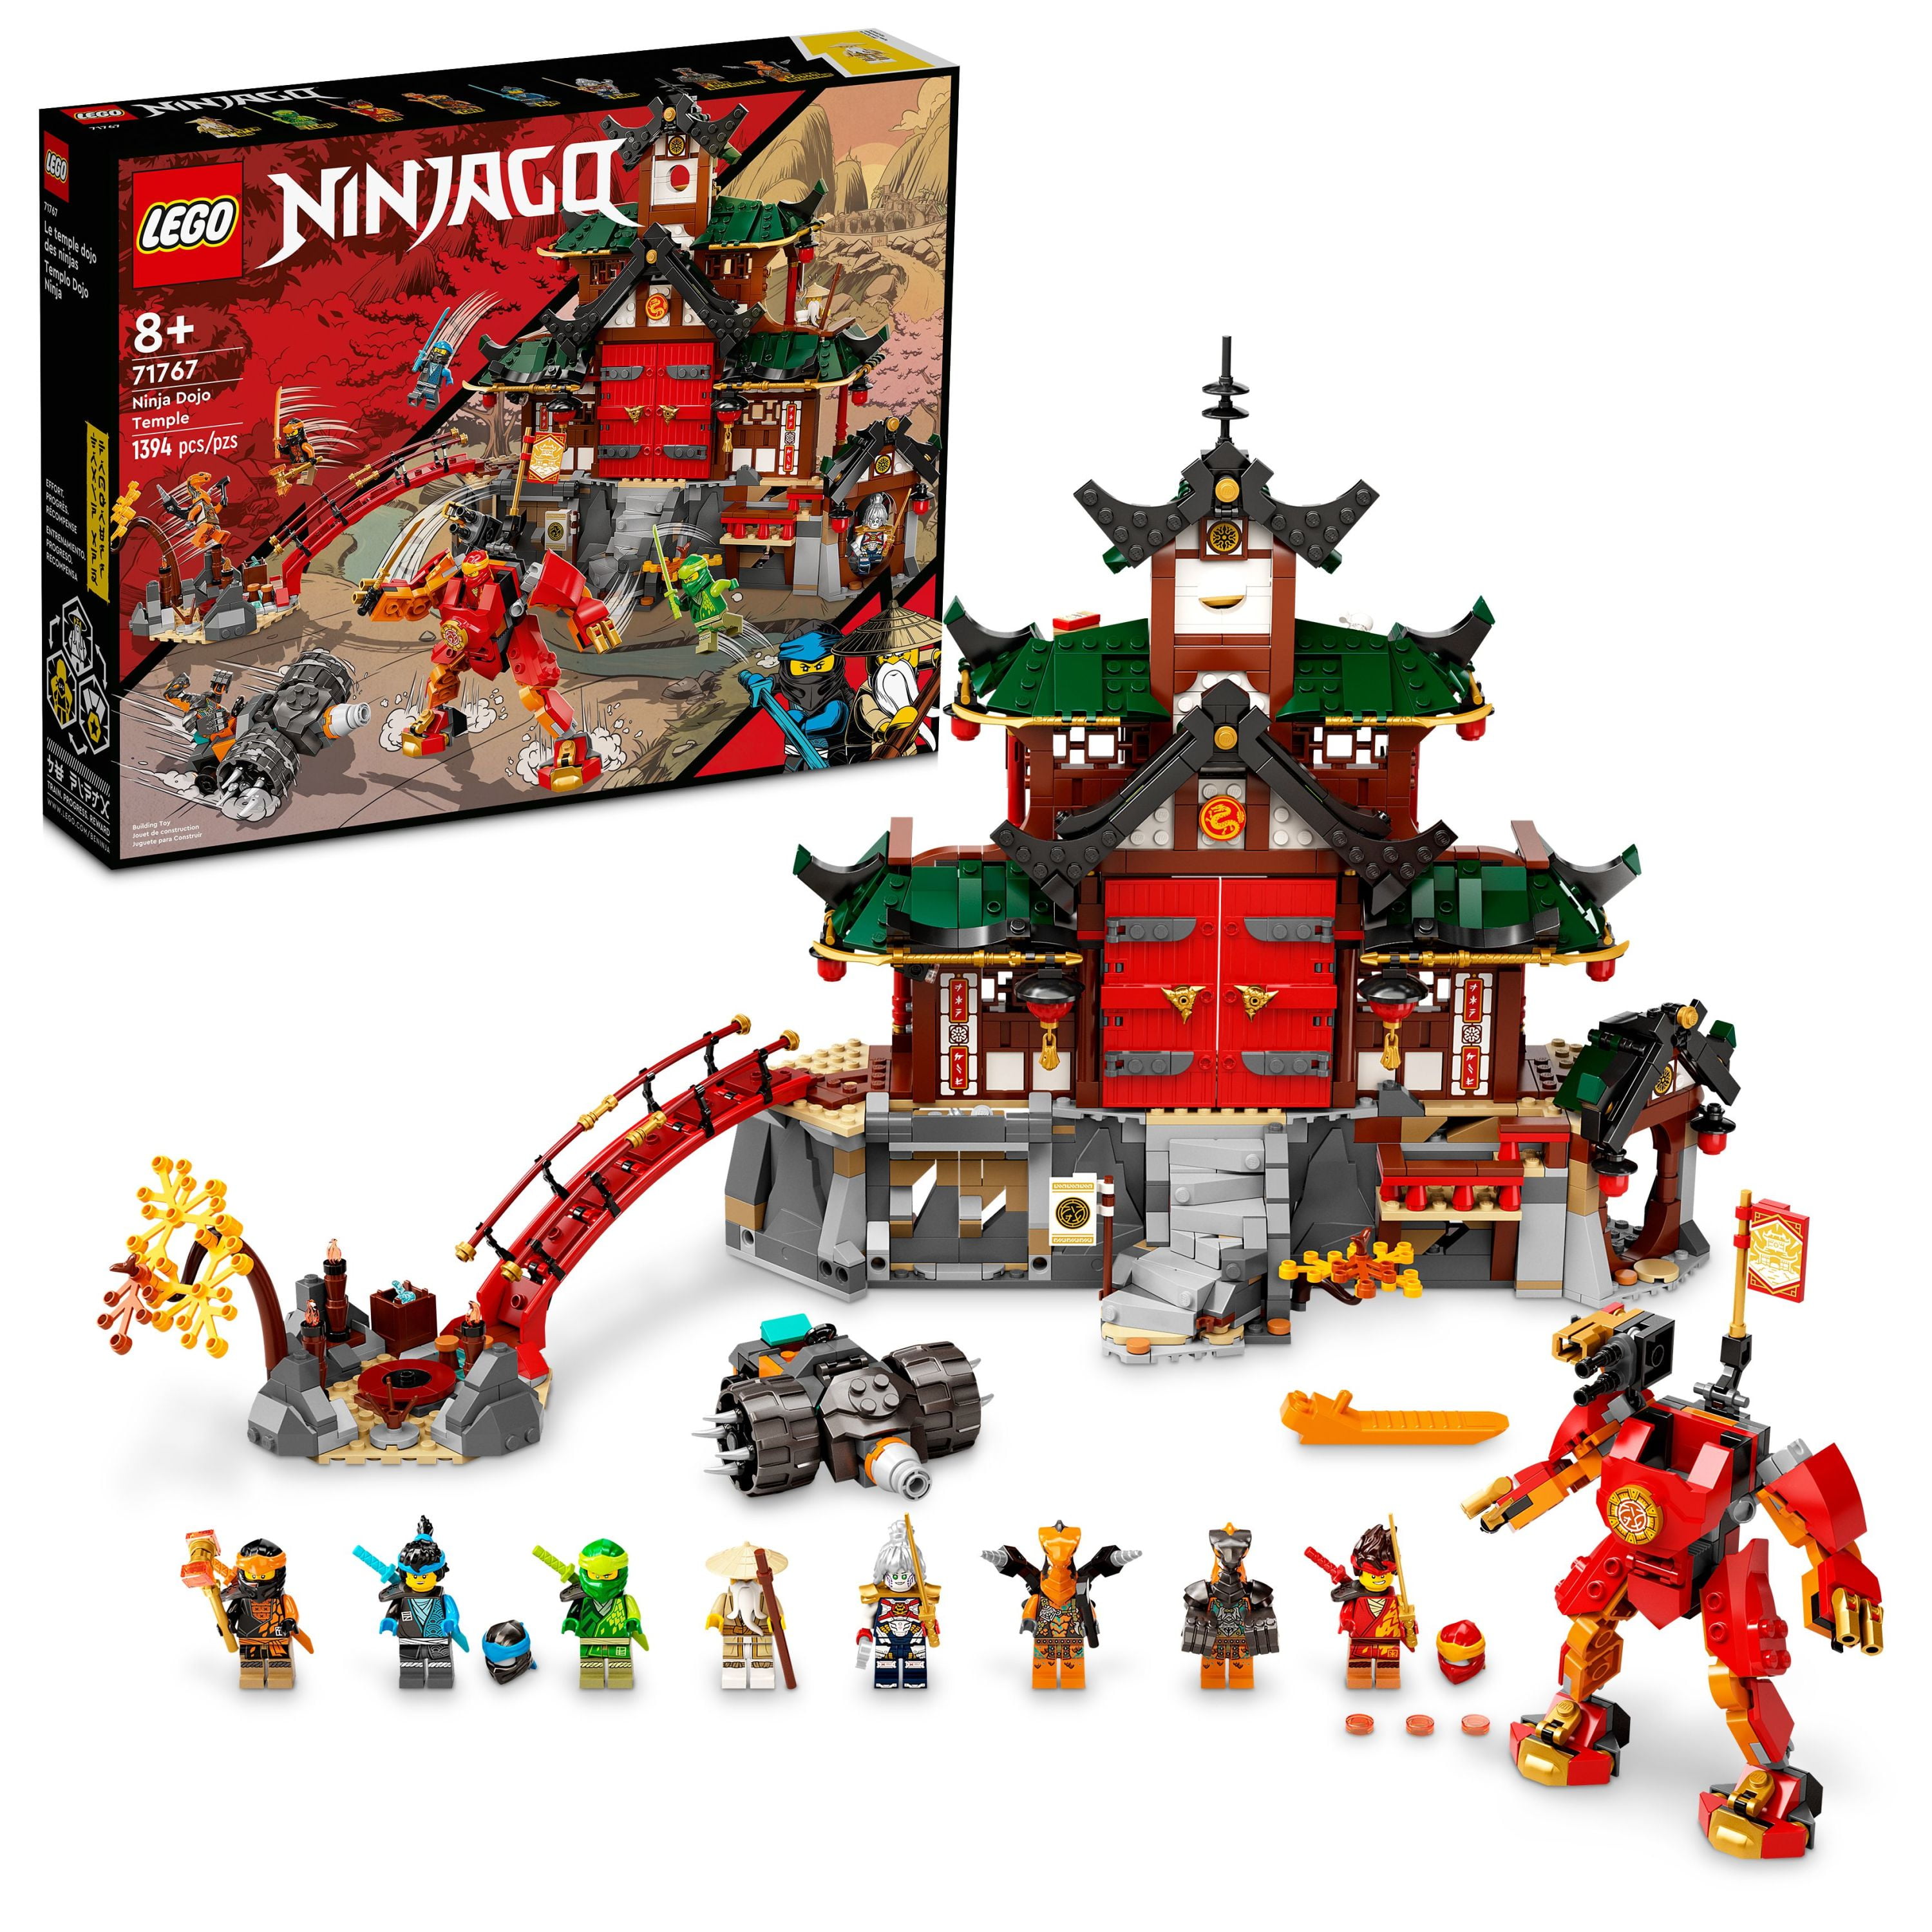 LEGO NINJAGO Ninja Dojo Temple Masters of Spinjitzu Set with Lloyd & Kai Minifigures and Toy Snake Collectible Banner Series - Walmart.com